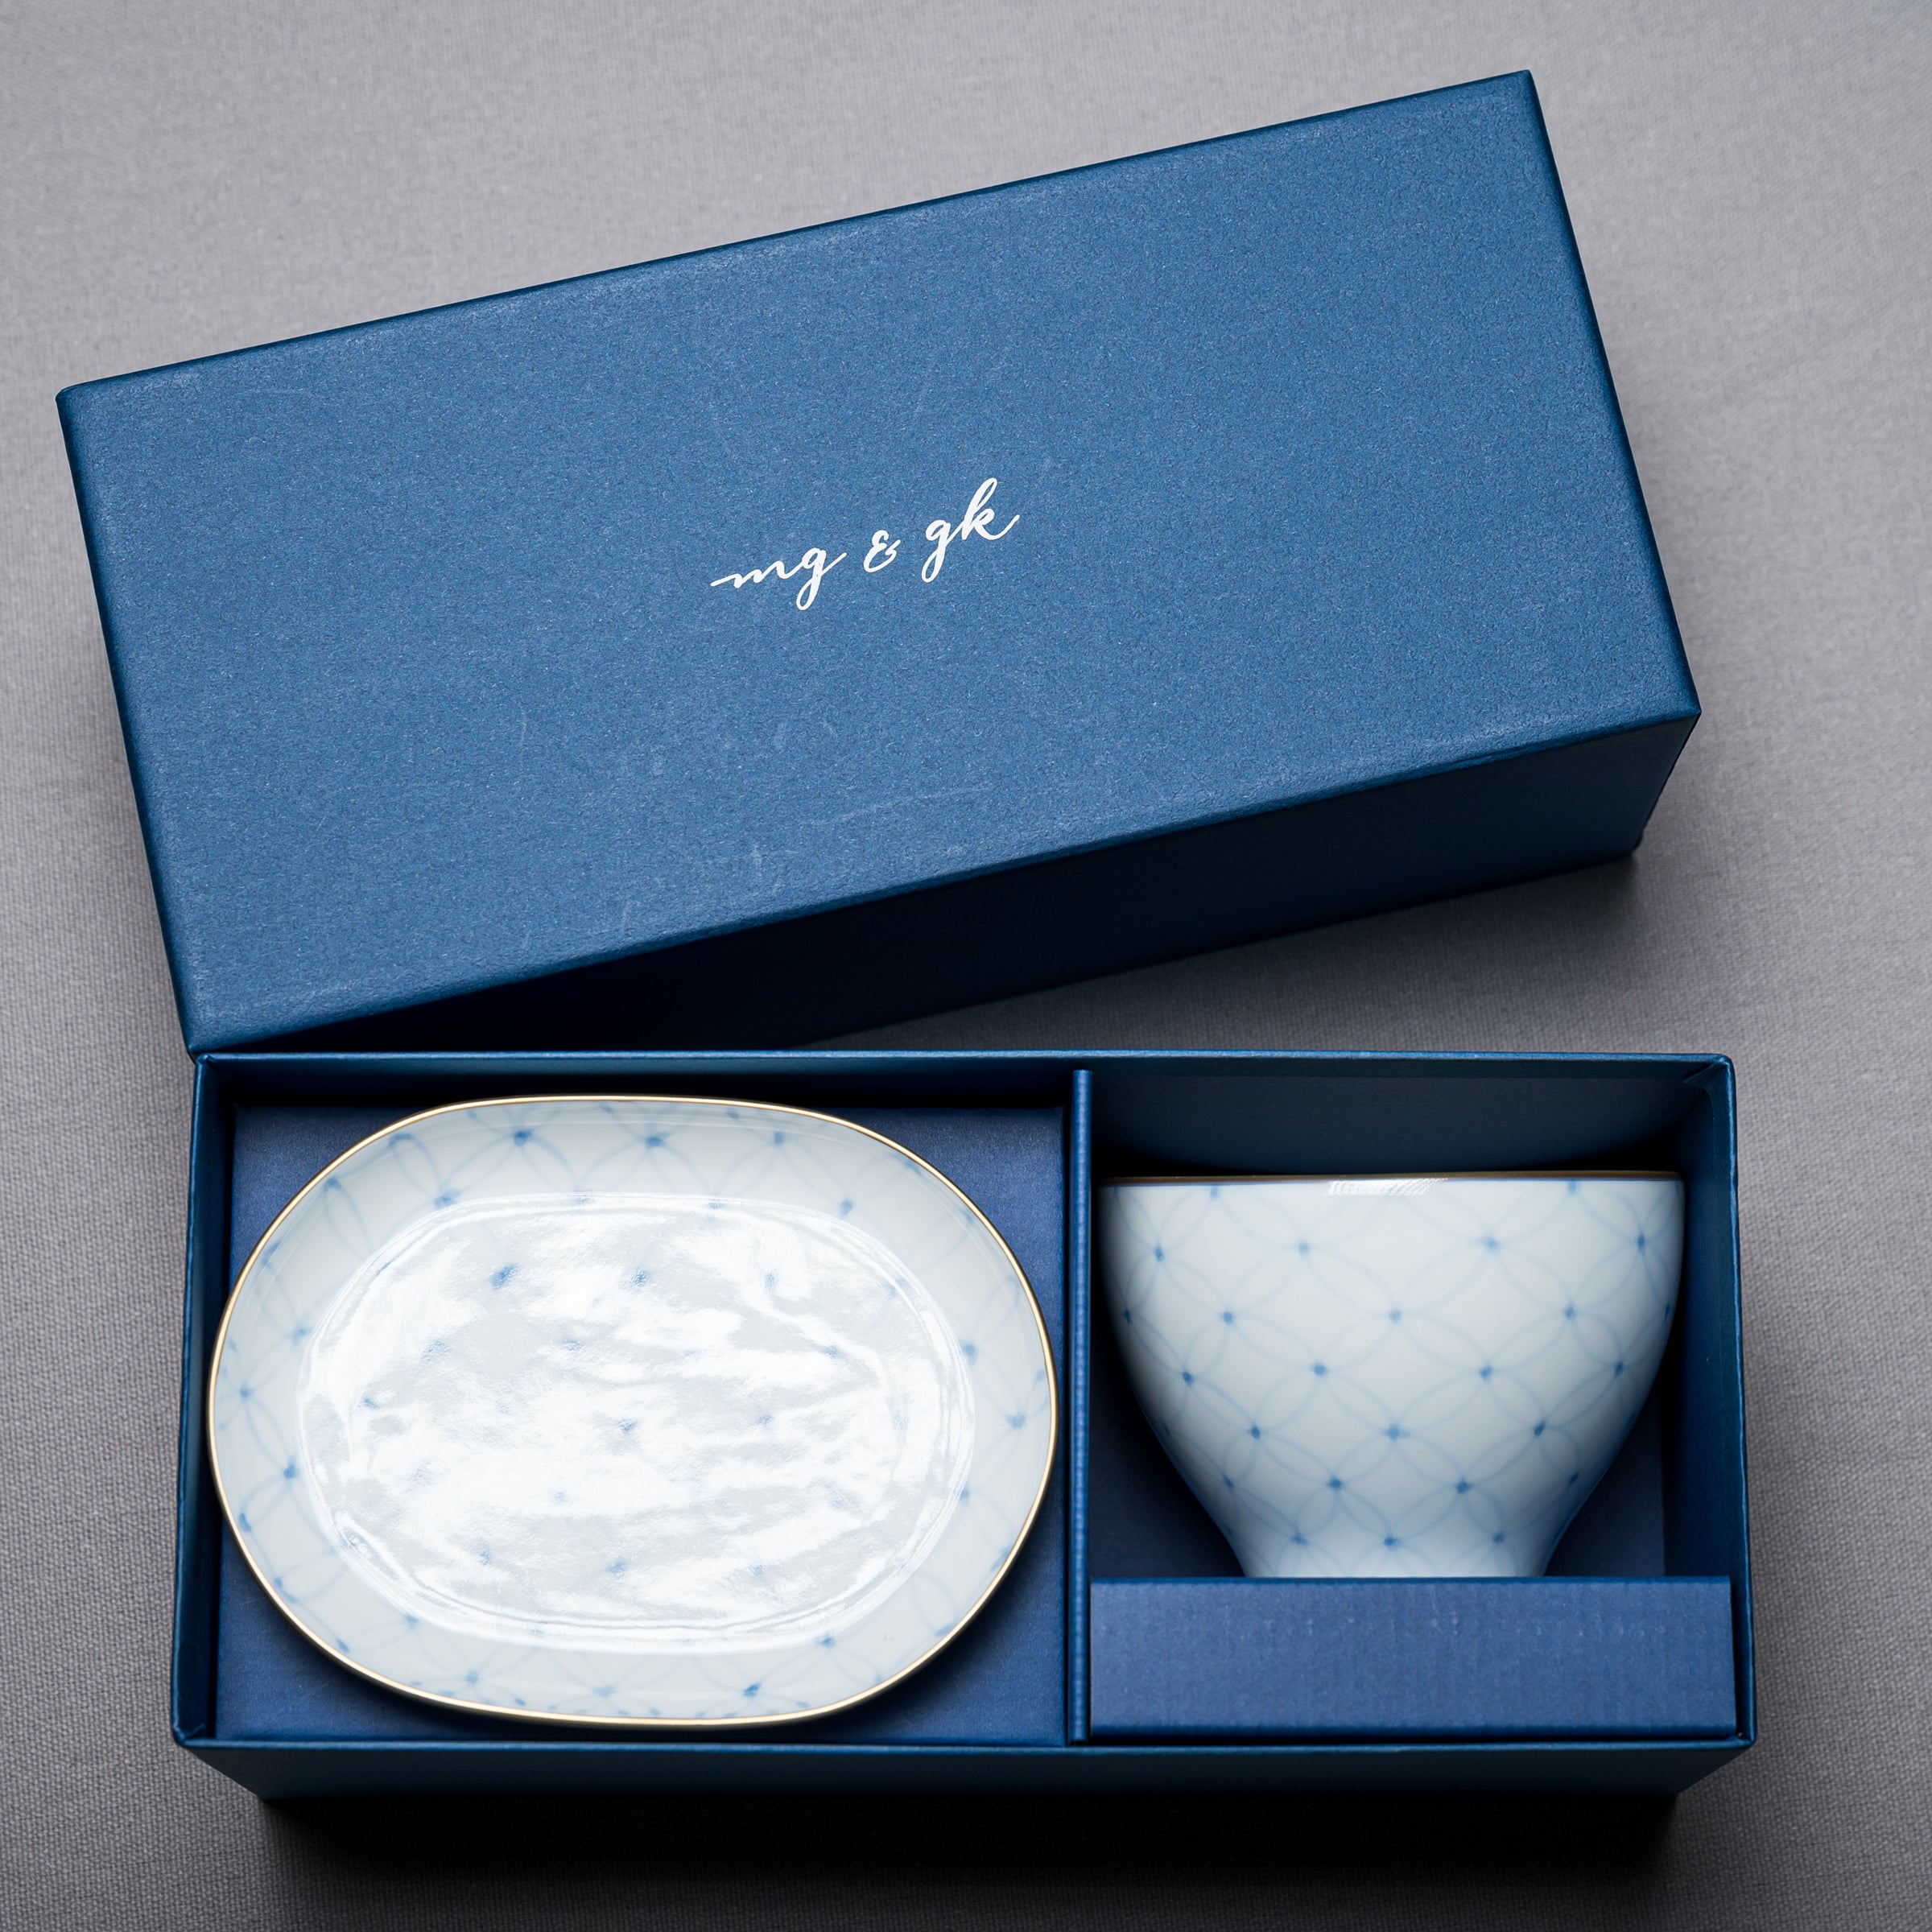 Arita Soup Cup & Saucer Plate Gift Set / Shippo 七宝 (Seven Treasure)